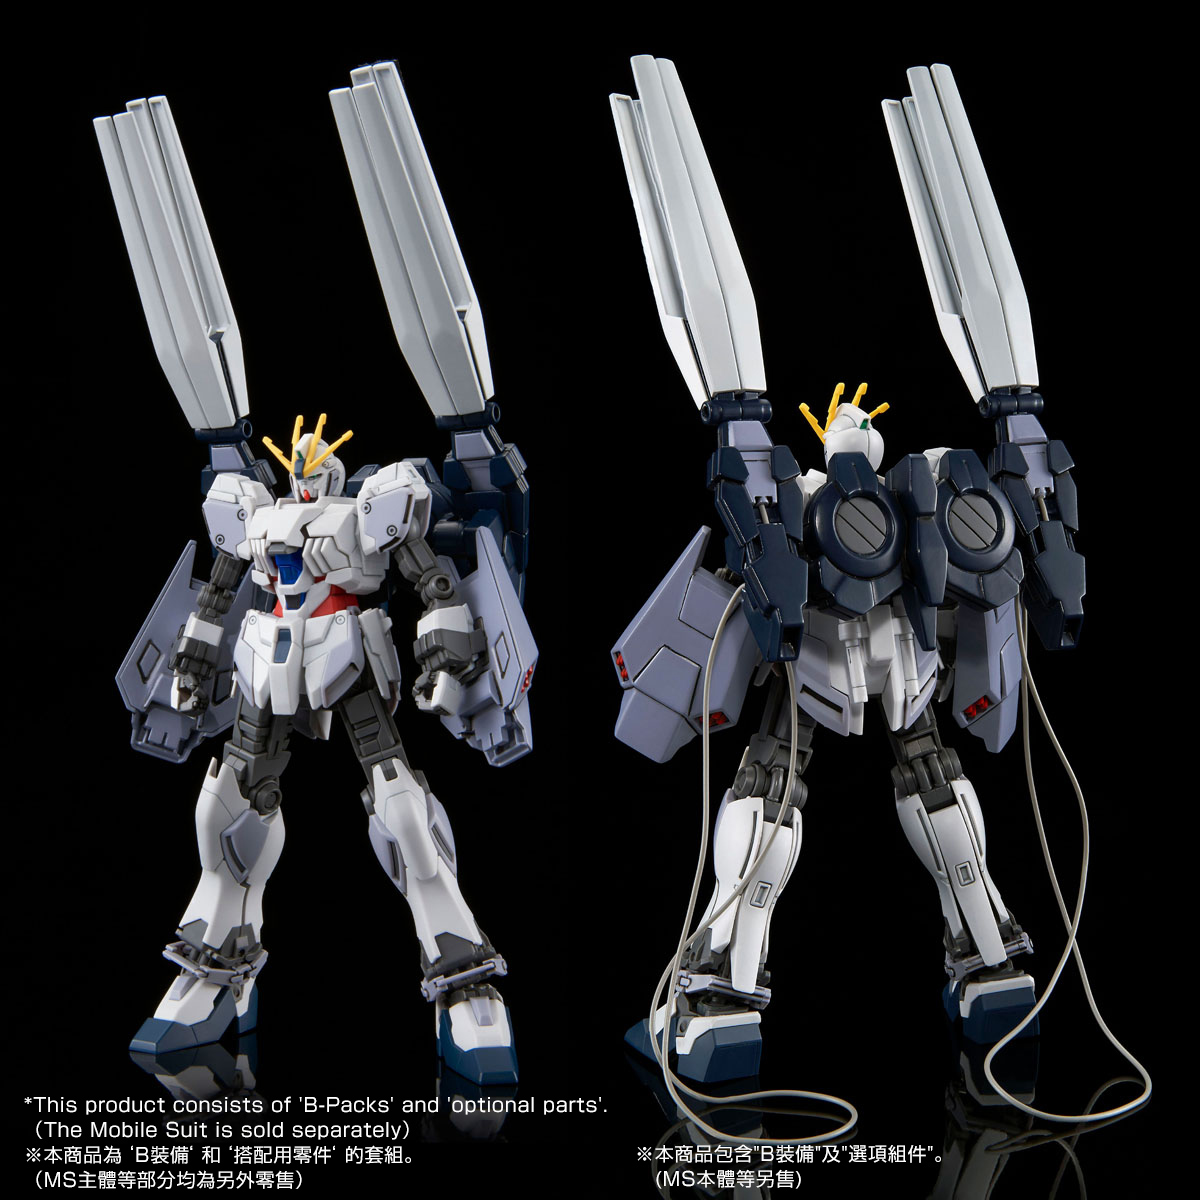 Hg 1 144 B Packs Expansion Set For Narrative Gundam Gundam Premium Bandai Hong Kong Online Store For Action Figures Model Kits Toys And More